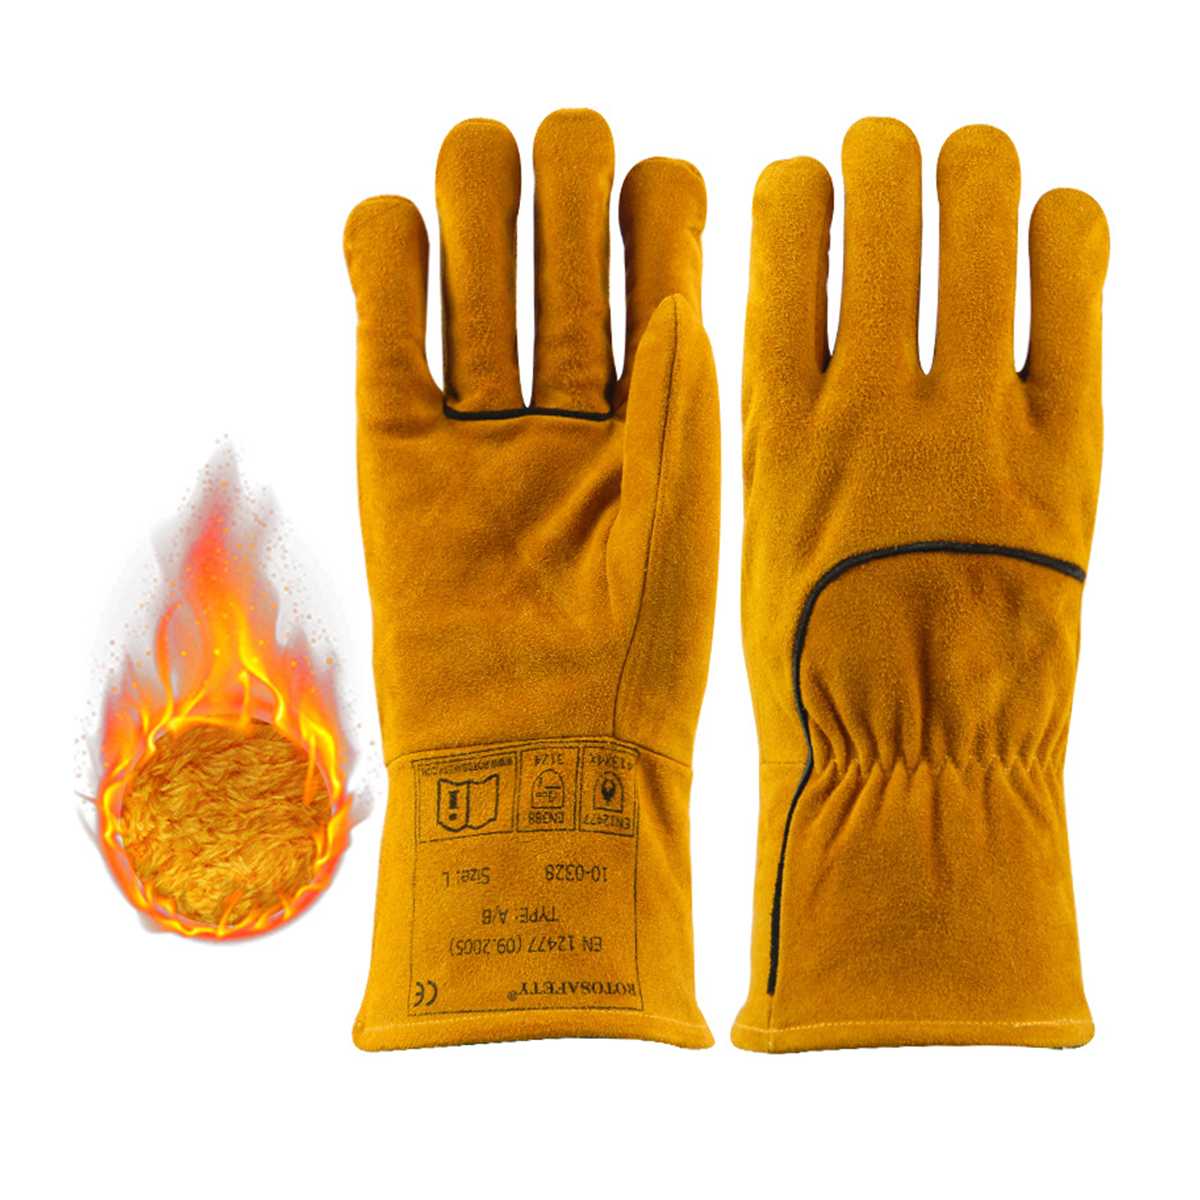 Welding Gloves Leather Forge Heat Resistant Vuam Hnab looj tes rau Mig, Tig Welder, BBQ, Rauv Featured duab